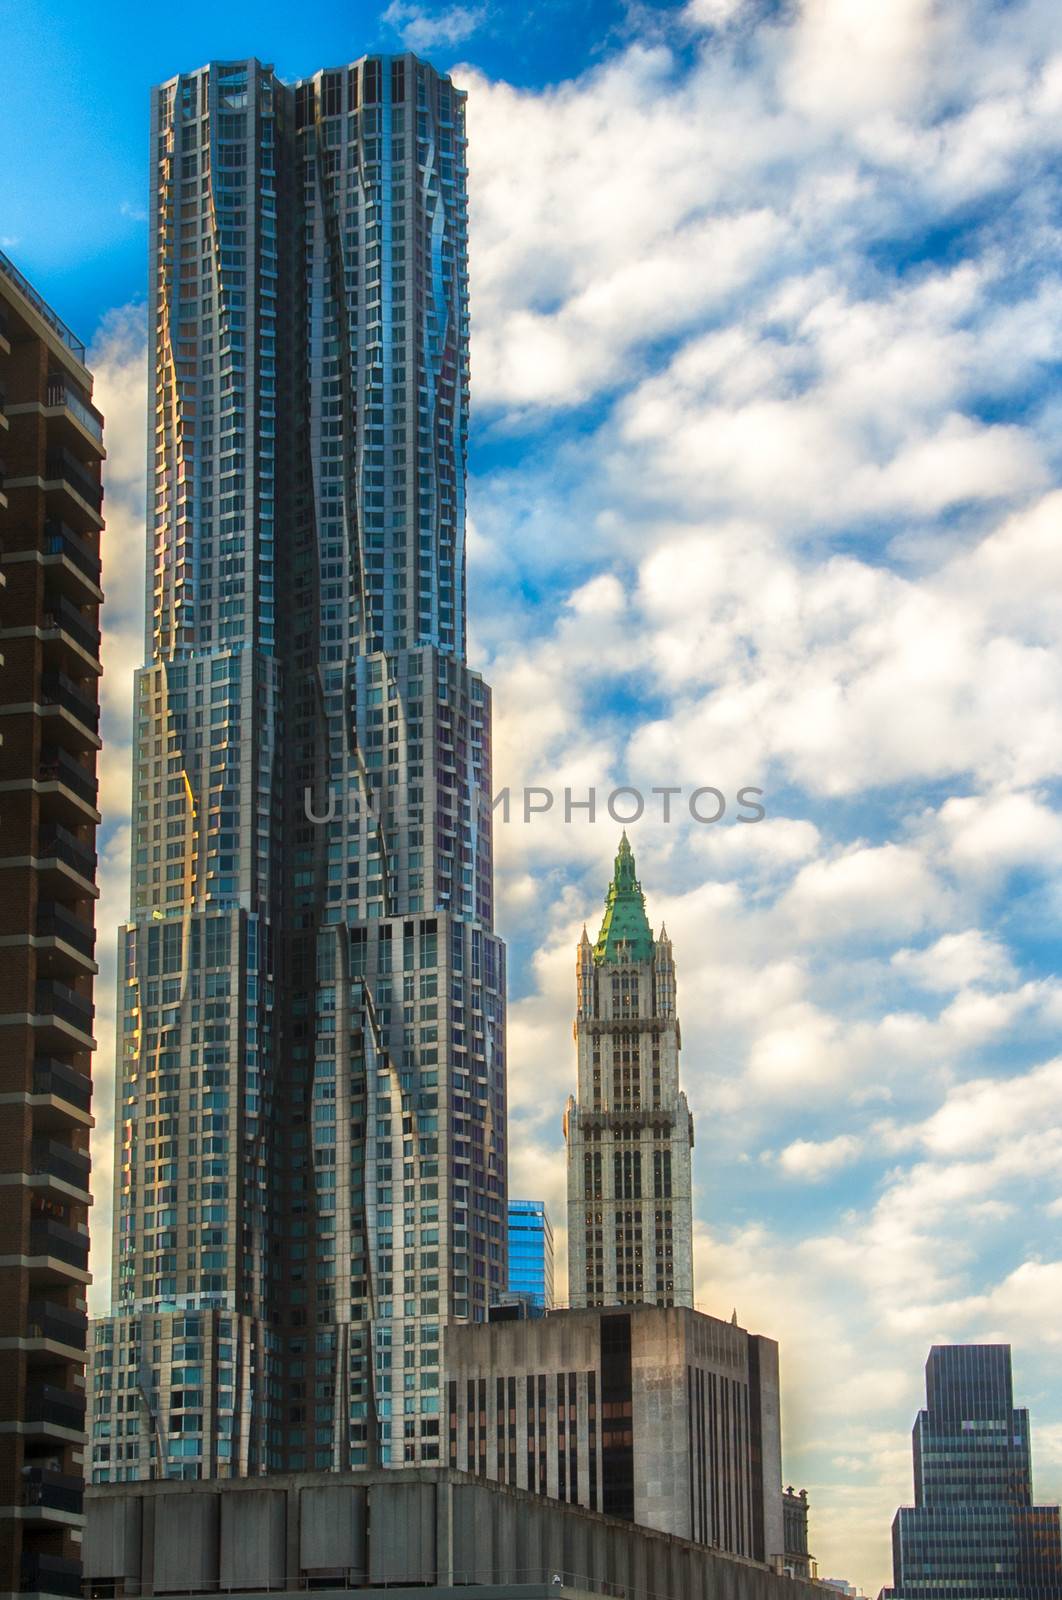 Beekman Tower in Manhattan by CelsoDiniz